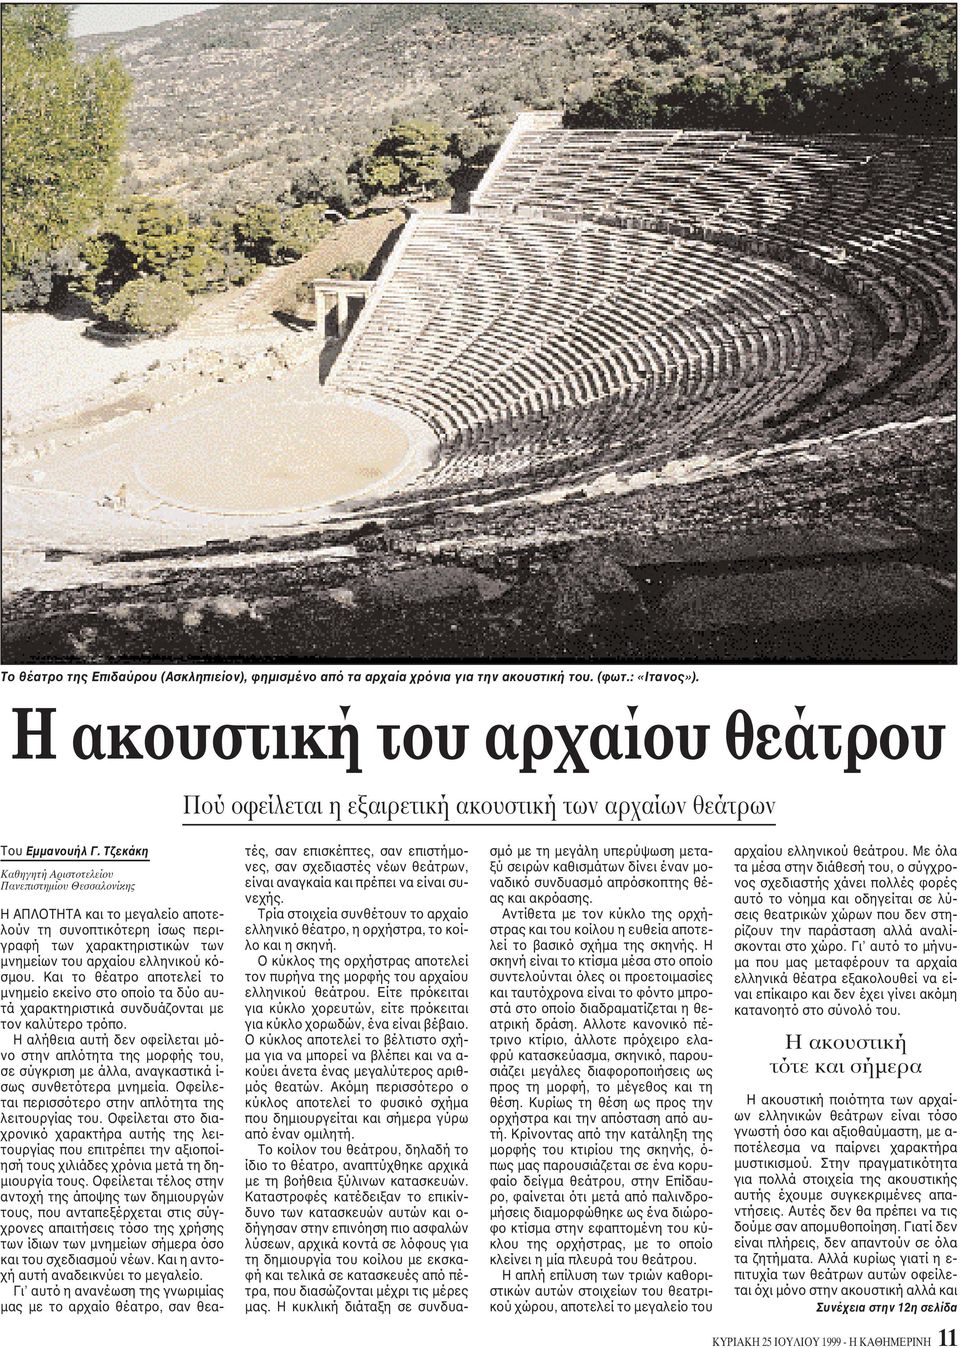 Tζεκάκη Kαθηγητή Aριστοτελείου Πανεπιστημίου Θεσσαλονίκης H AΠΛOTHTA και το μεγαλείο αποτελούν τη συνοπτικότερη ίσως περιγραφή των χαρακτηριστικών των μνημείων του αρχαίου ελληνικού κόσμου.